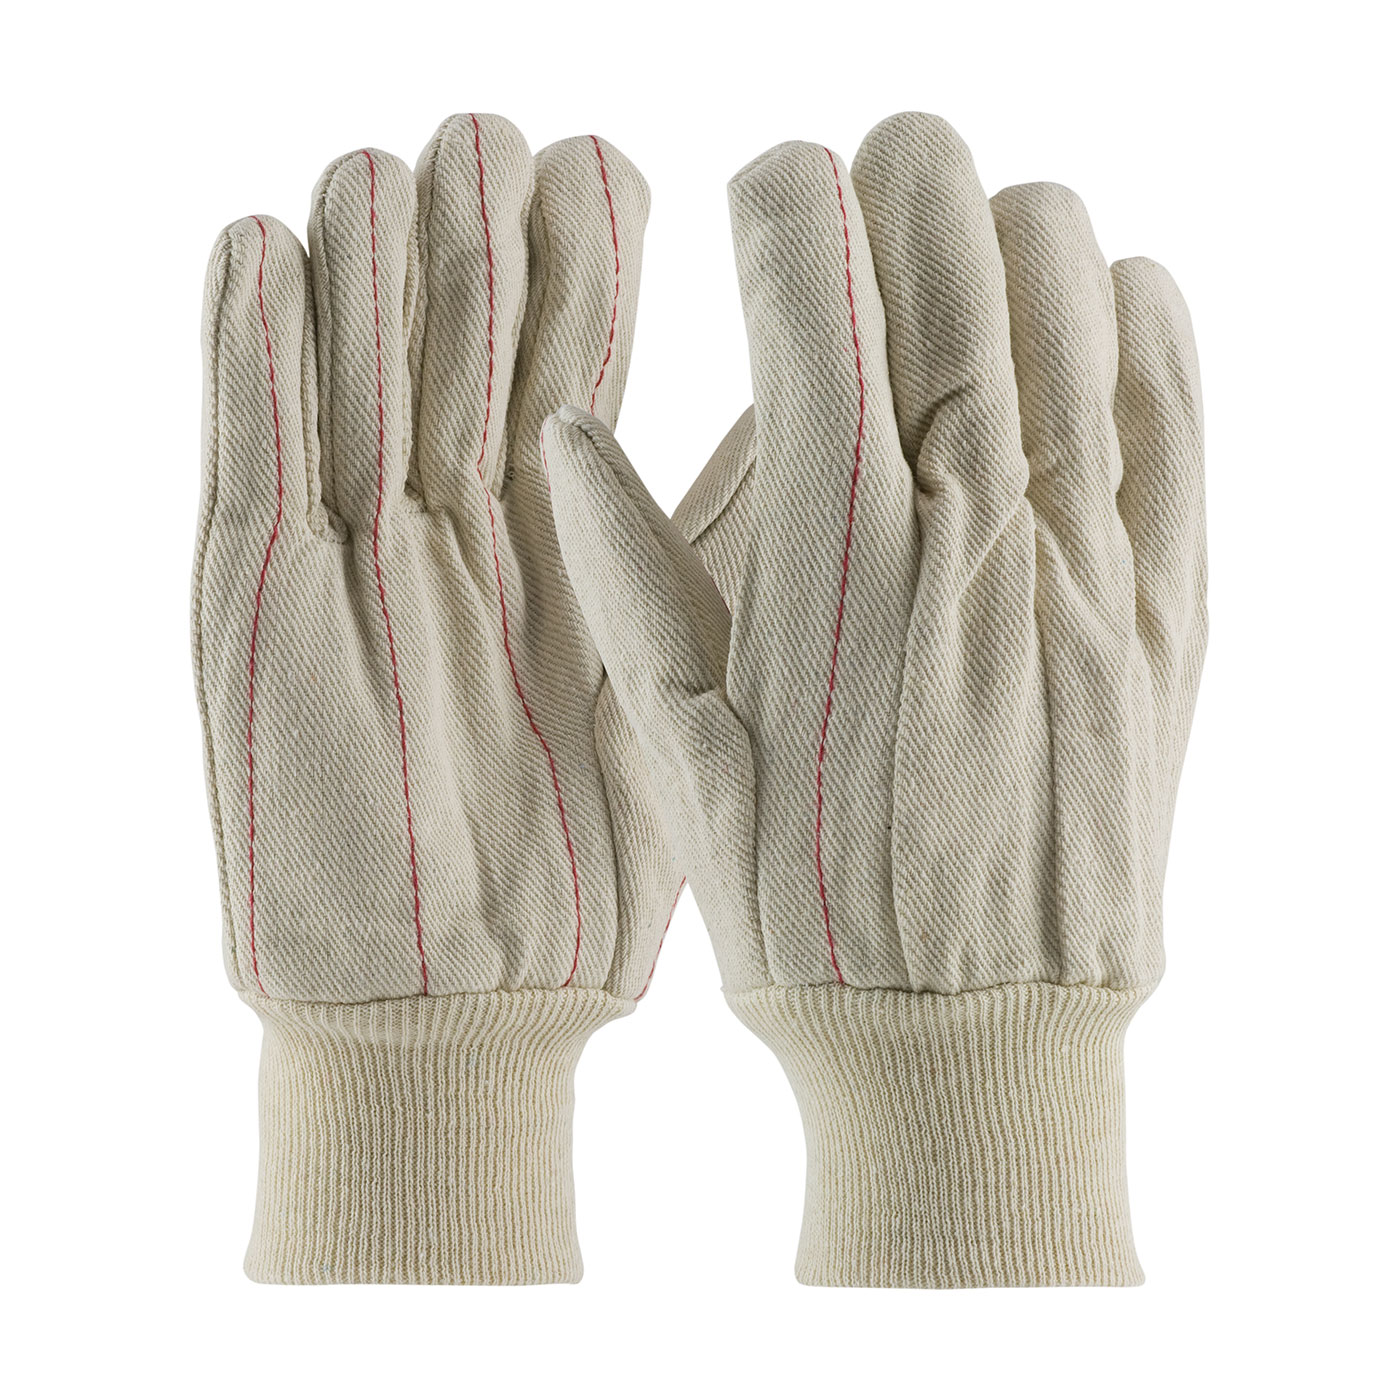 Fabric Work Gloves